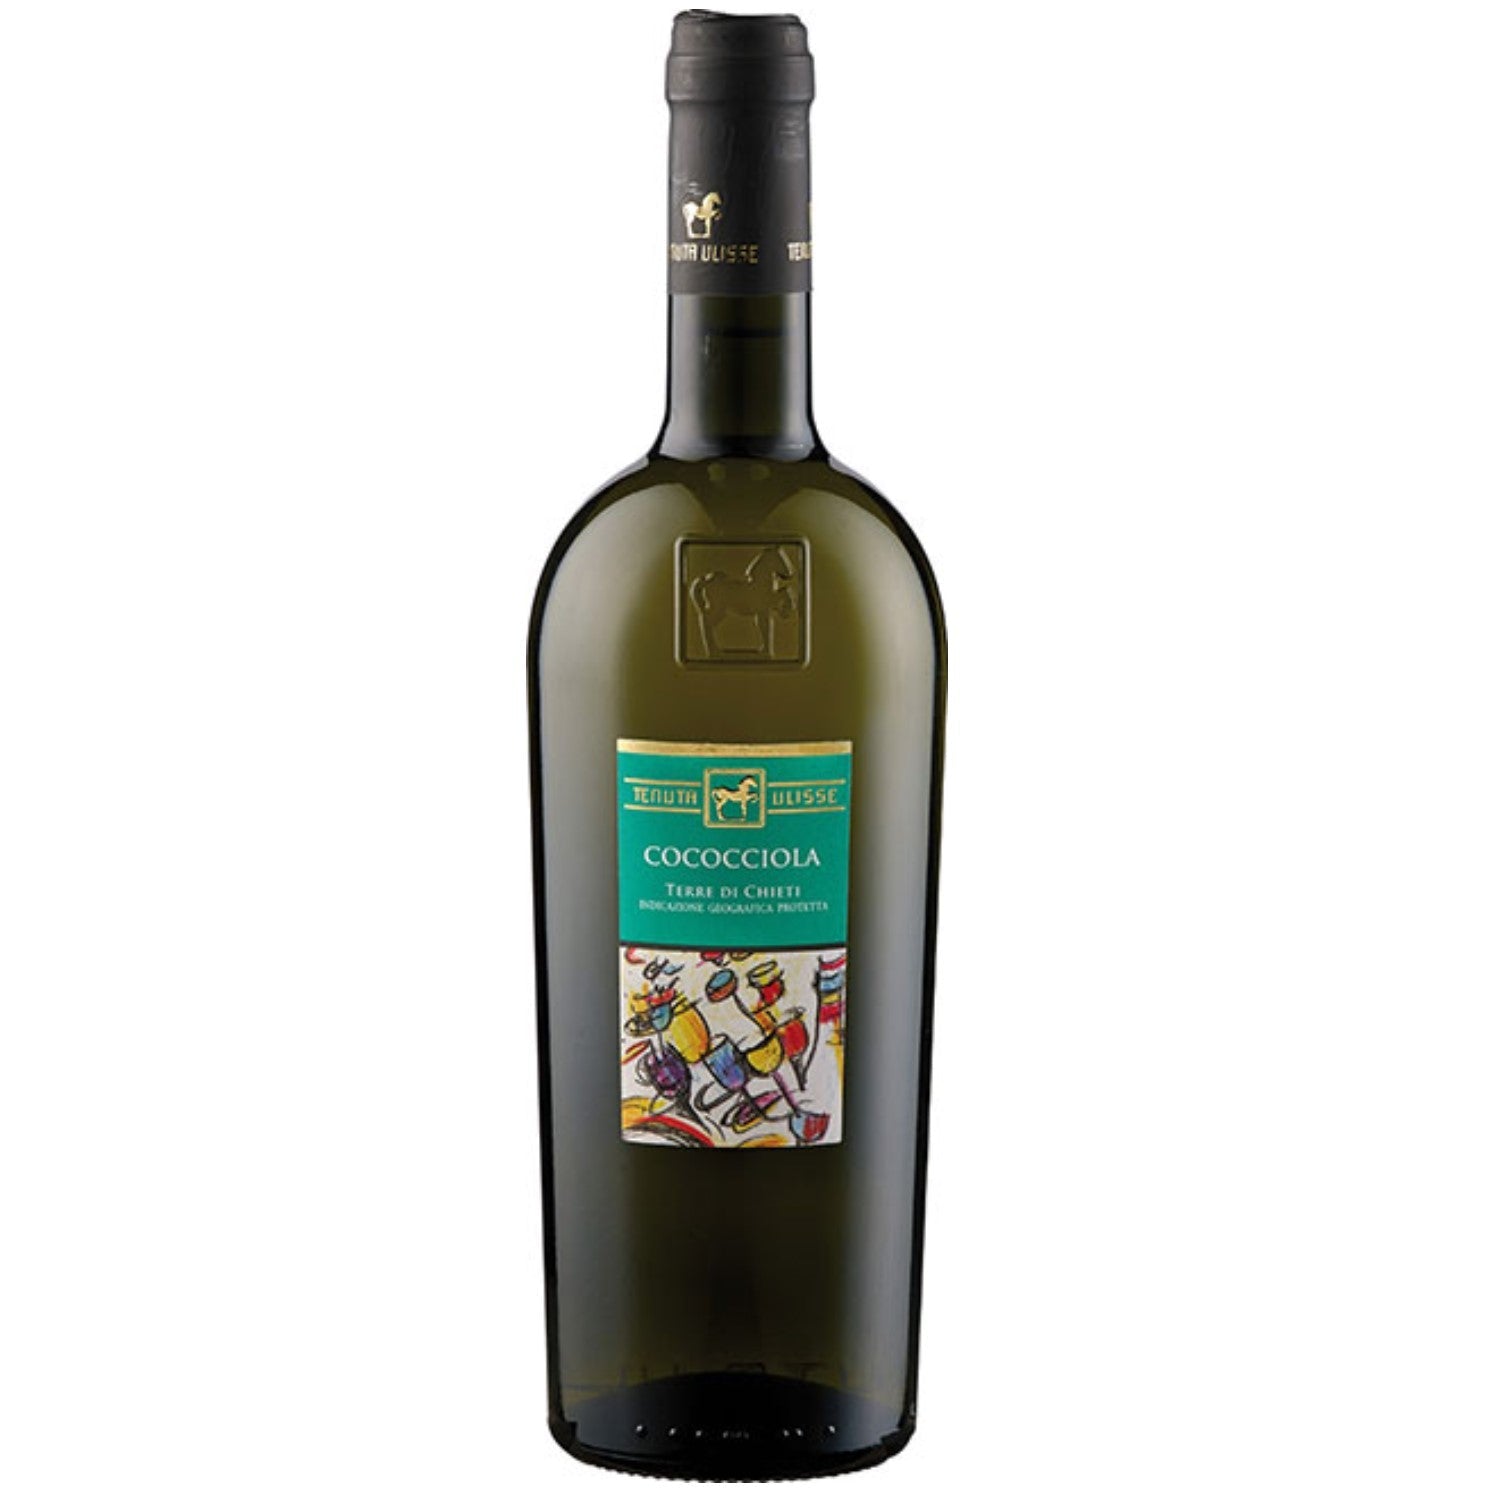 Tenuta Ulisse Cococciola Terre di Chieti Weißwein Wein Trocken IGP Italien (3 x 0.75l) - Versanel -